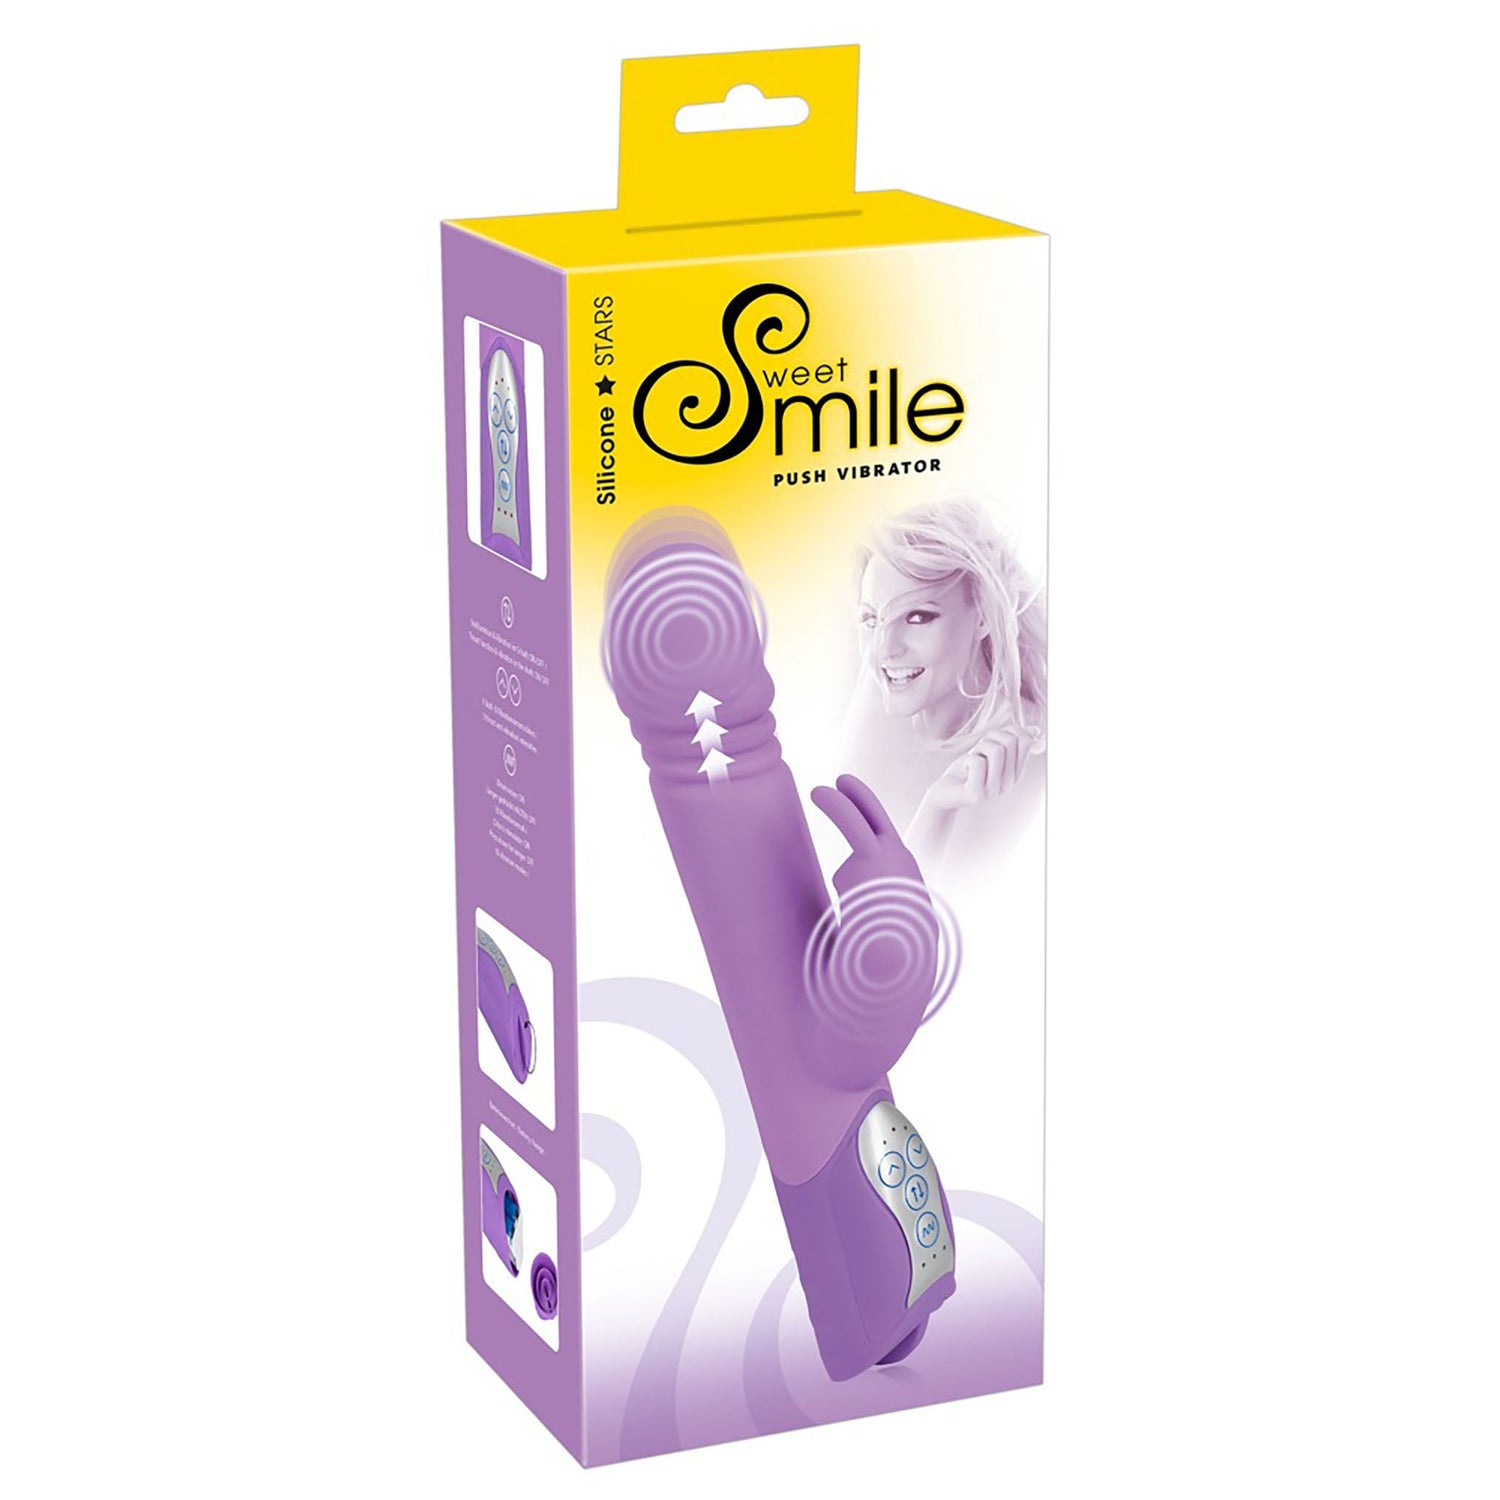 Push Vibrator von Sweet Smile in lila, Rabbitvibrator Verpackung